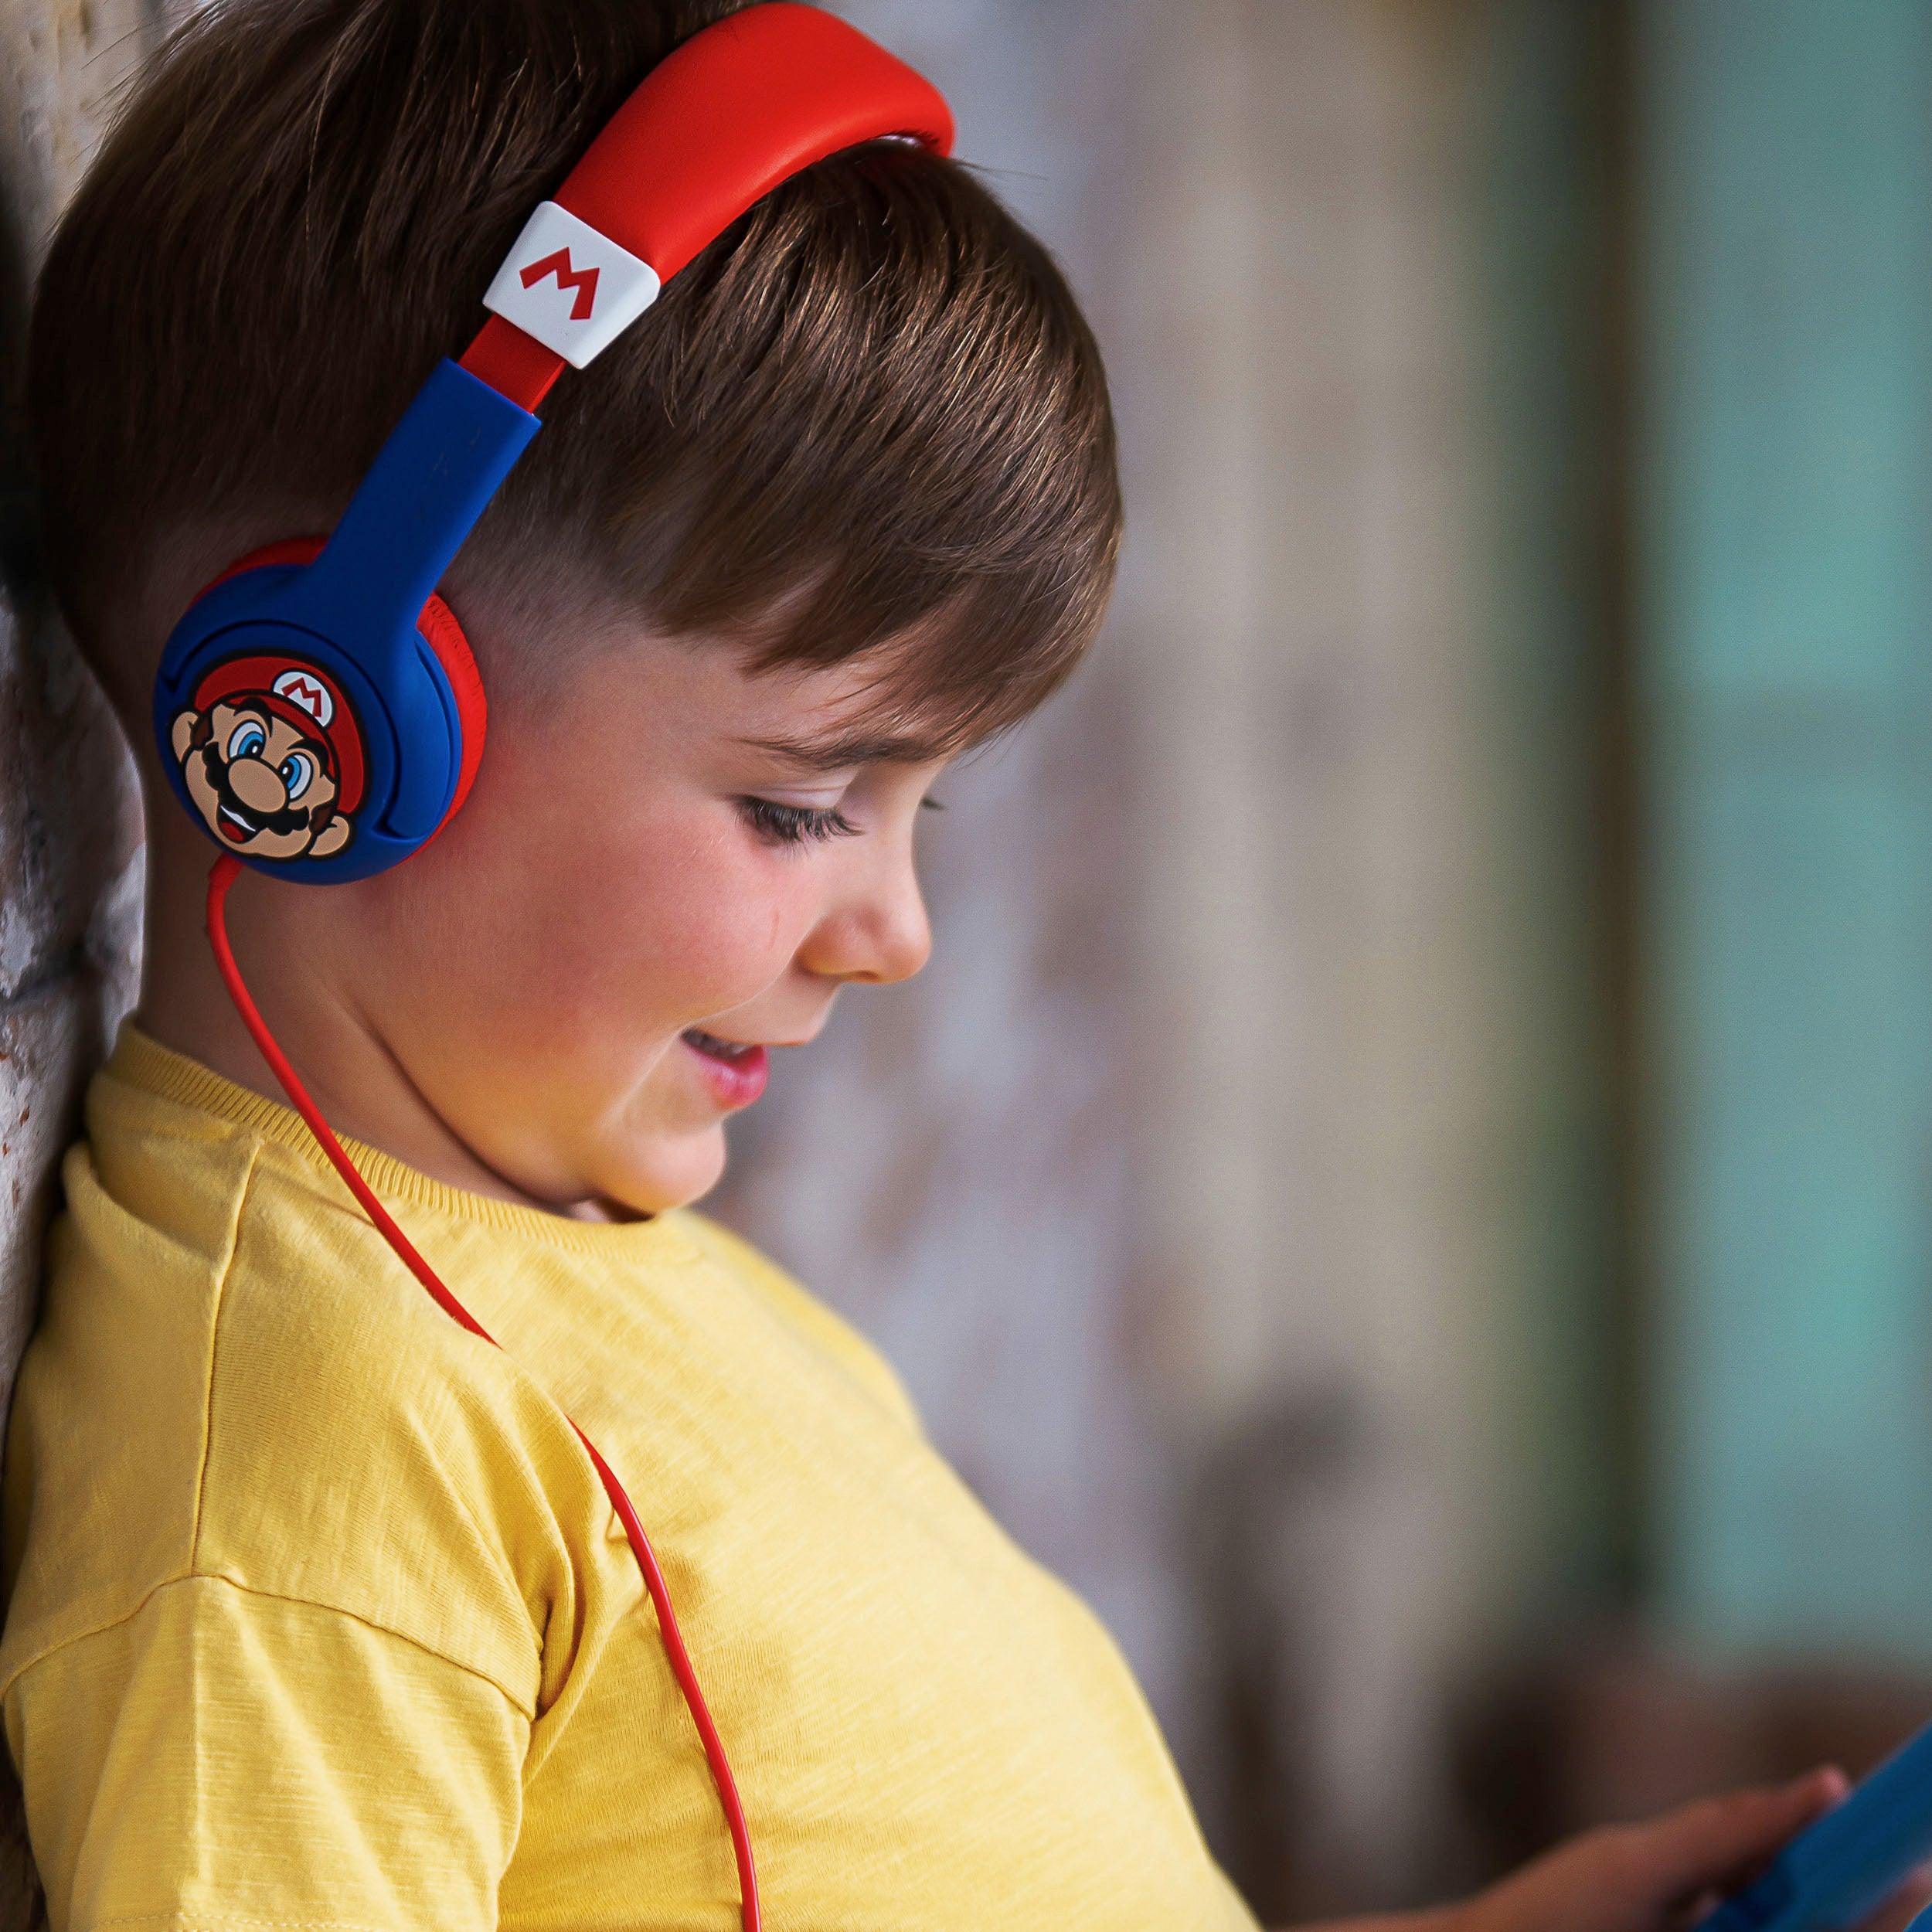 Nintendo Super Mario Kids Headphones - childrensheadphones.co.uk